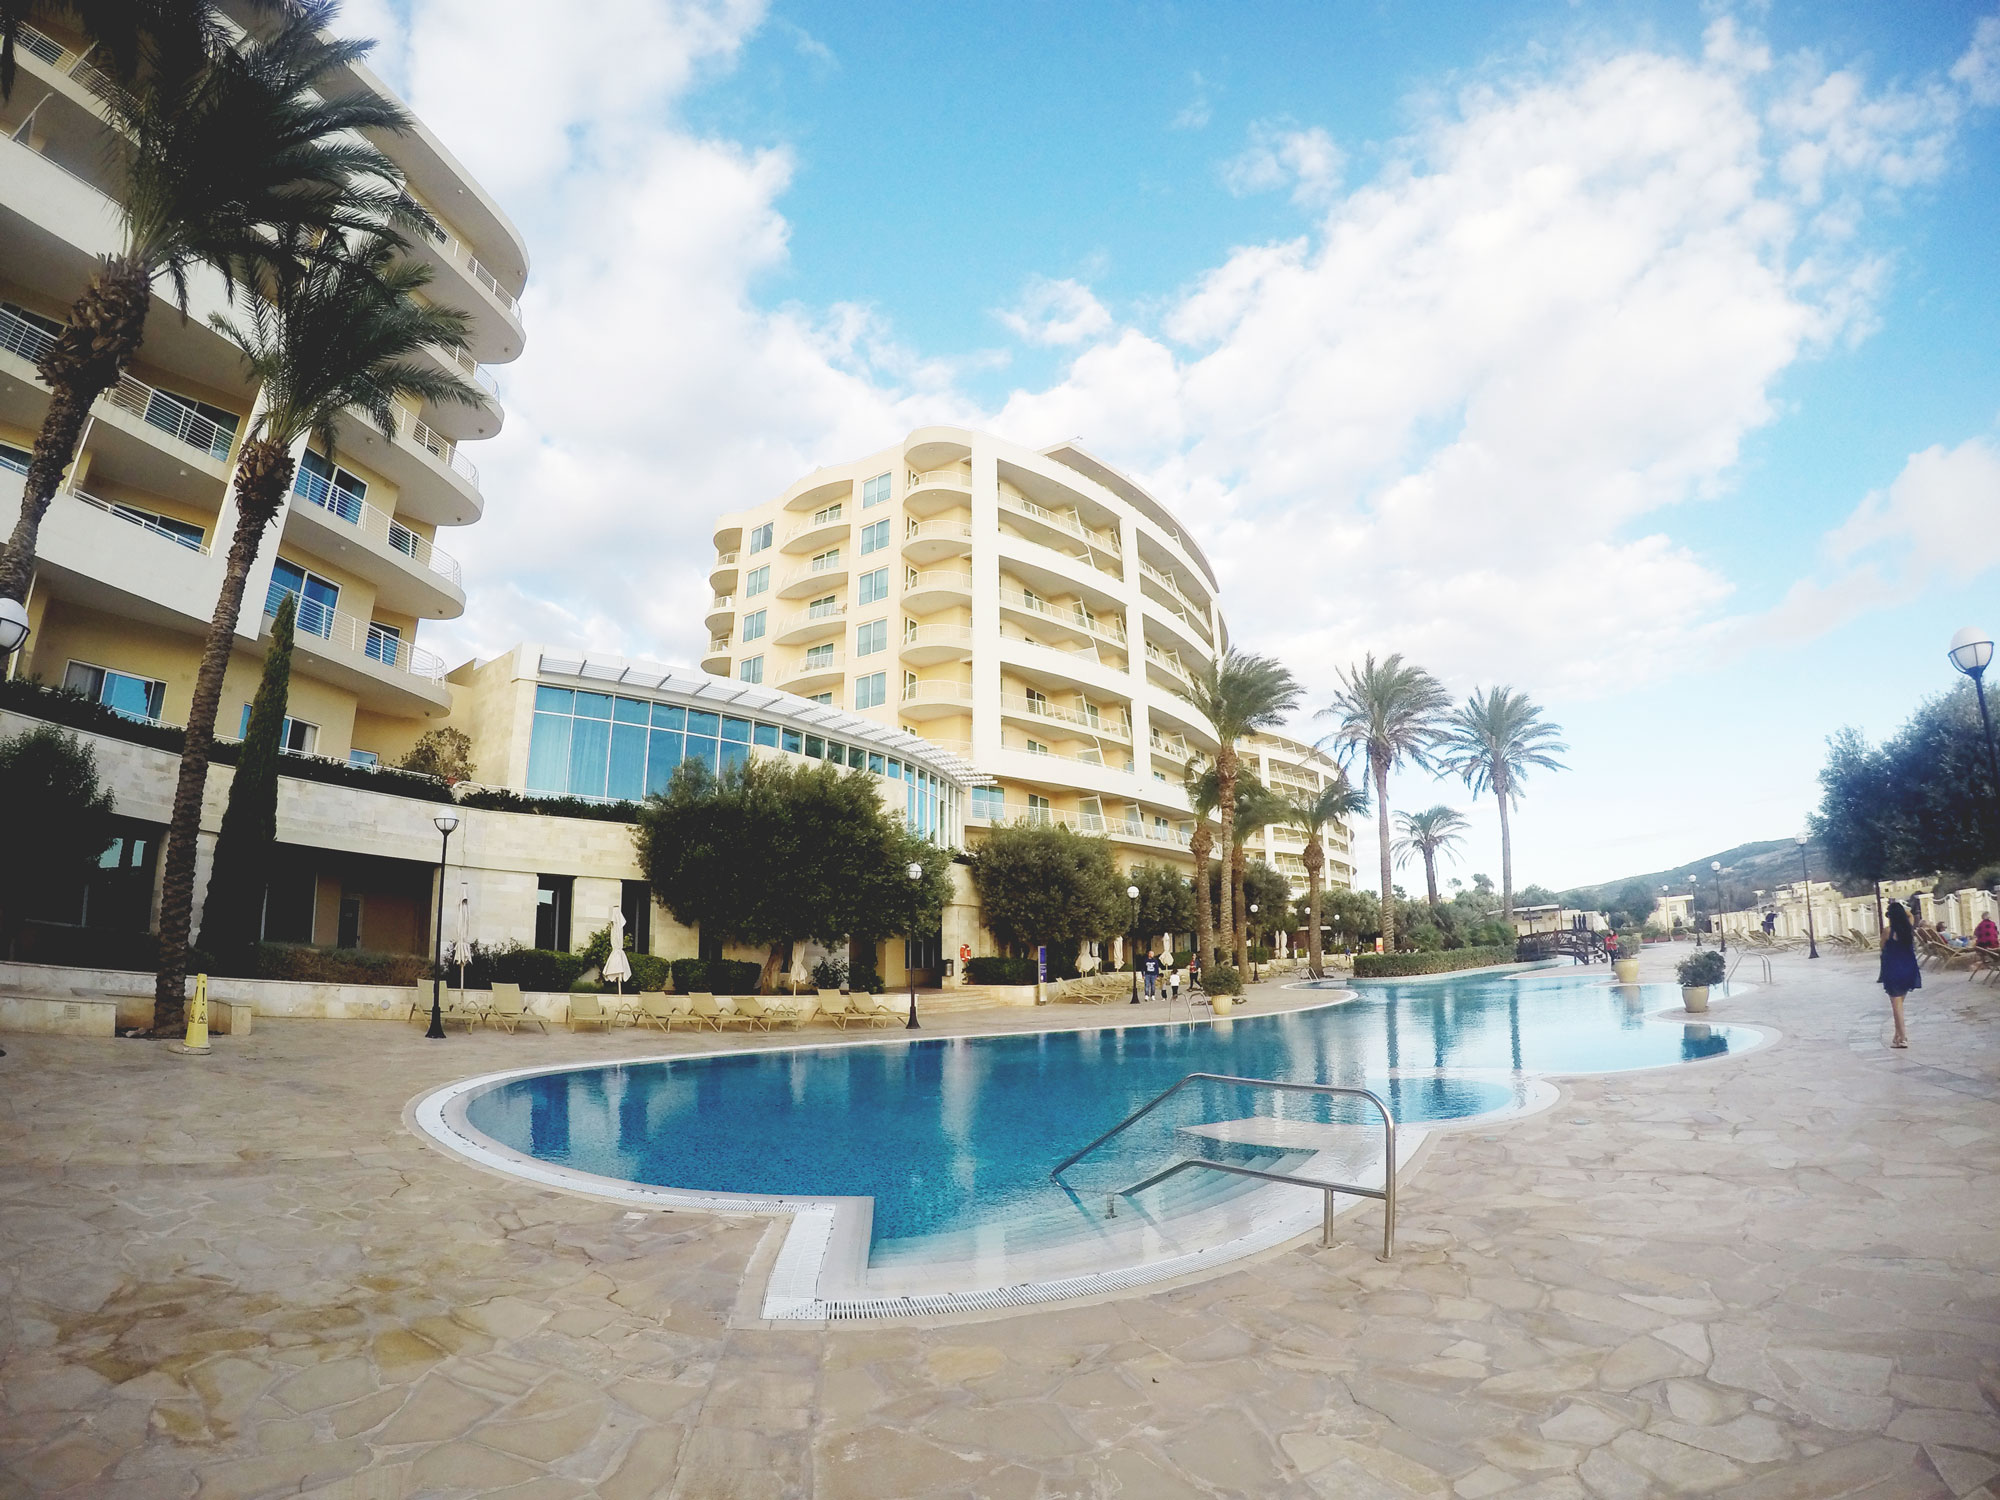 Styleat30 Travel Blog - Radisson Blu Resort & Spa, Malta, Golden Sands Hotel Review - 02